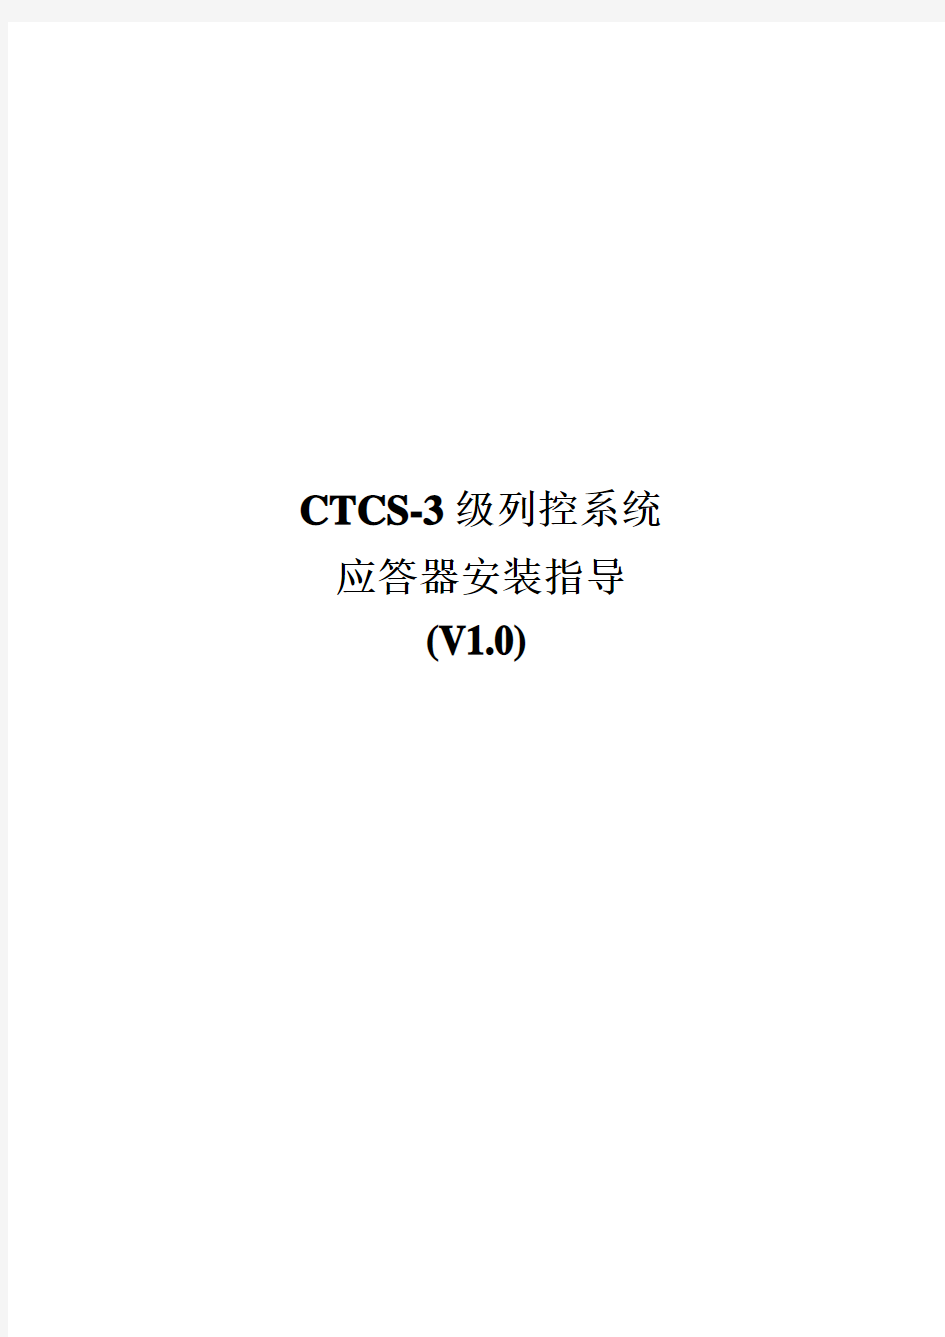 CTCS-3系统应答器安装指导